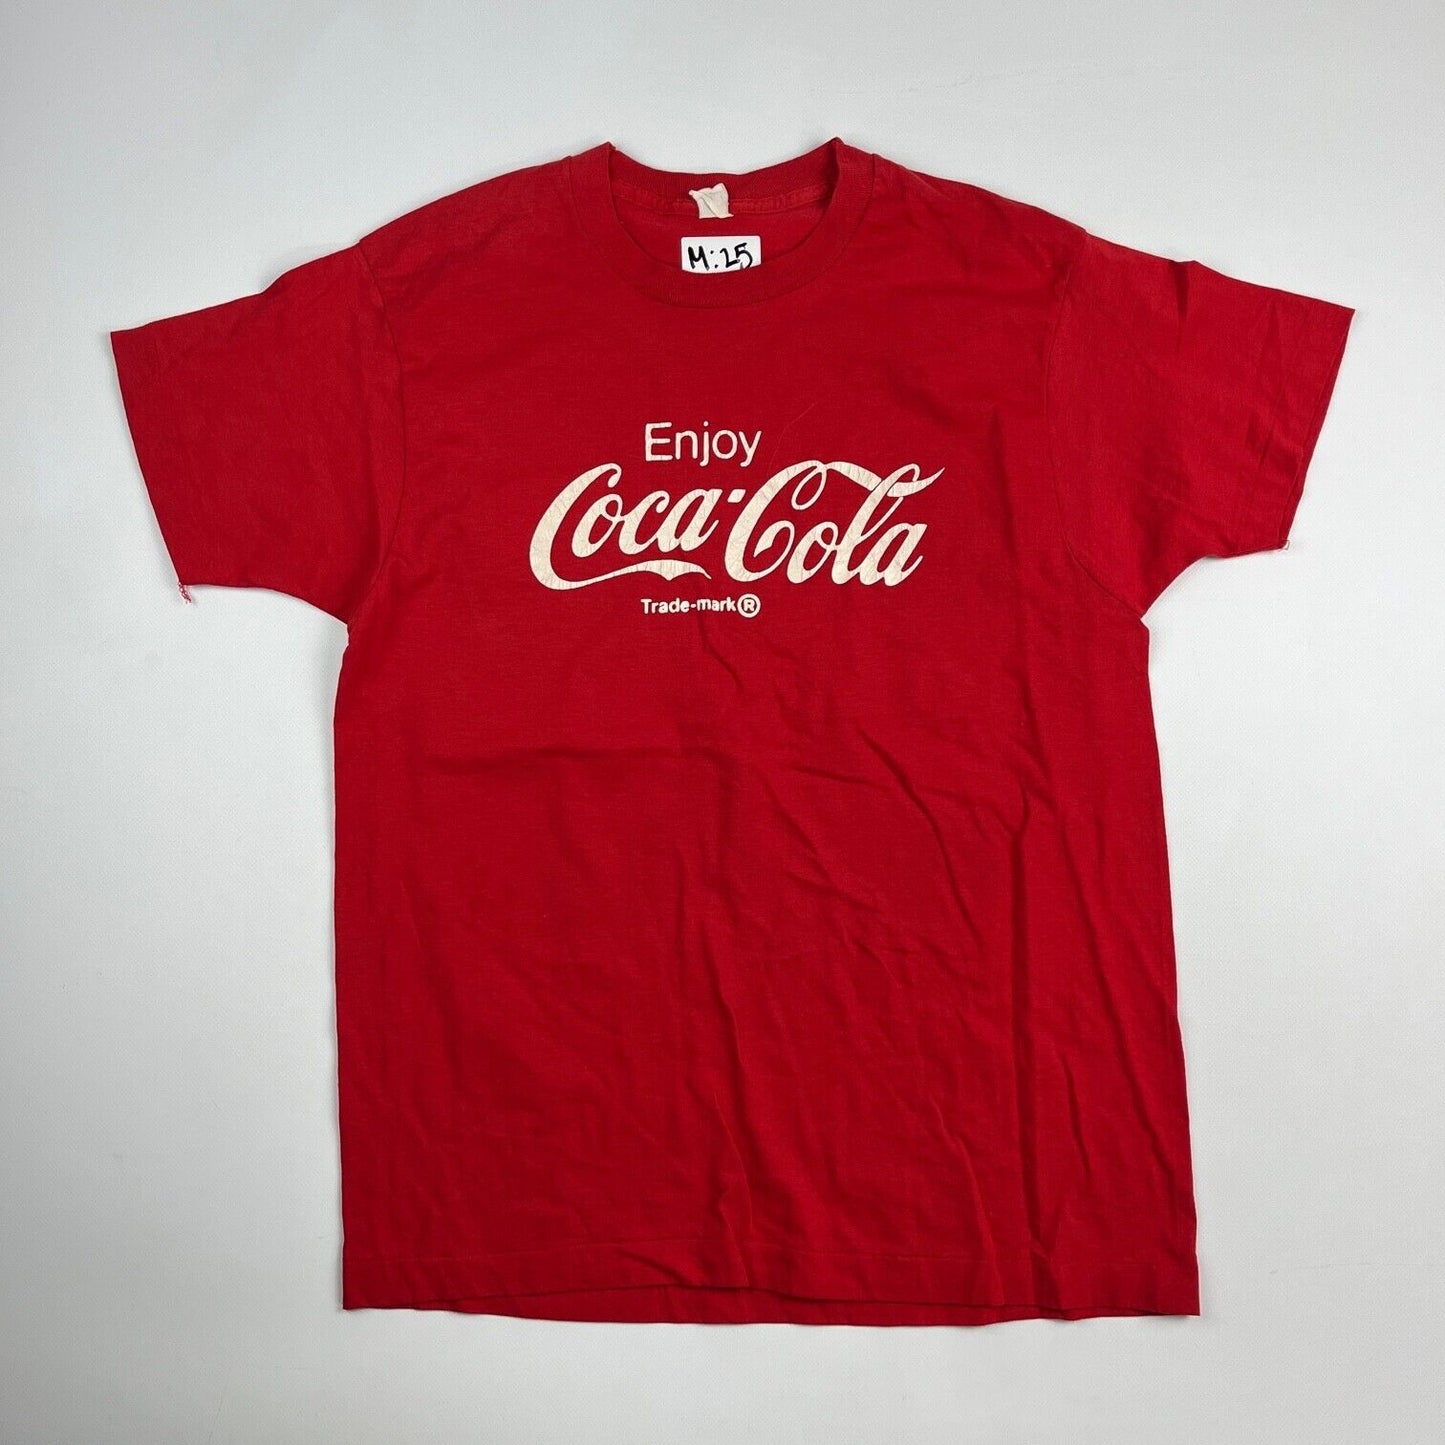 VINTAGE Coca Cola Enjoy Graphic Print Shirt Adult Large Red Men 90s